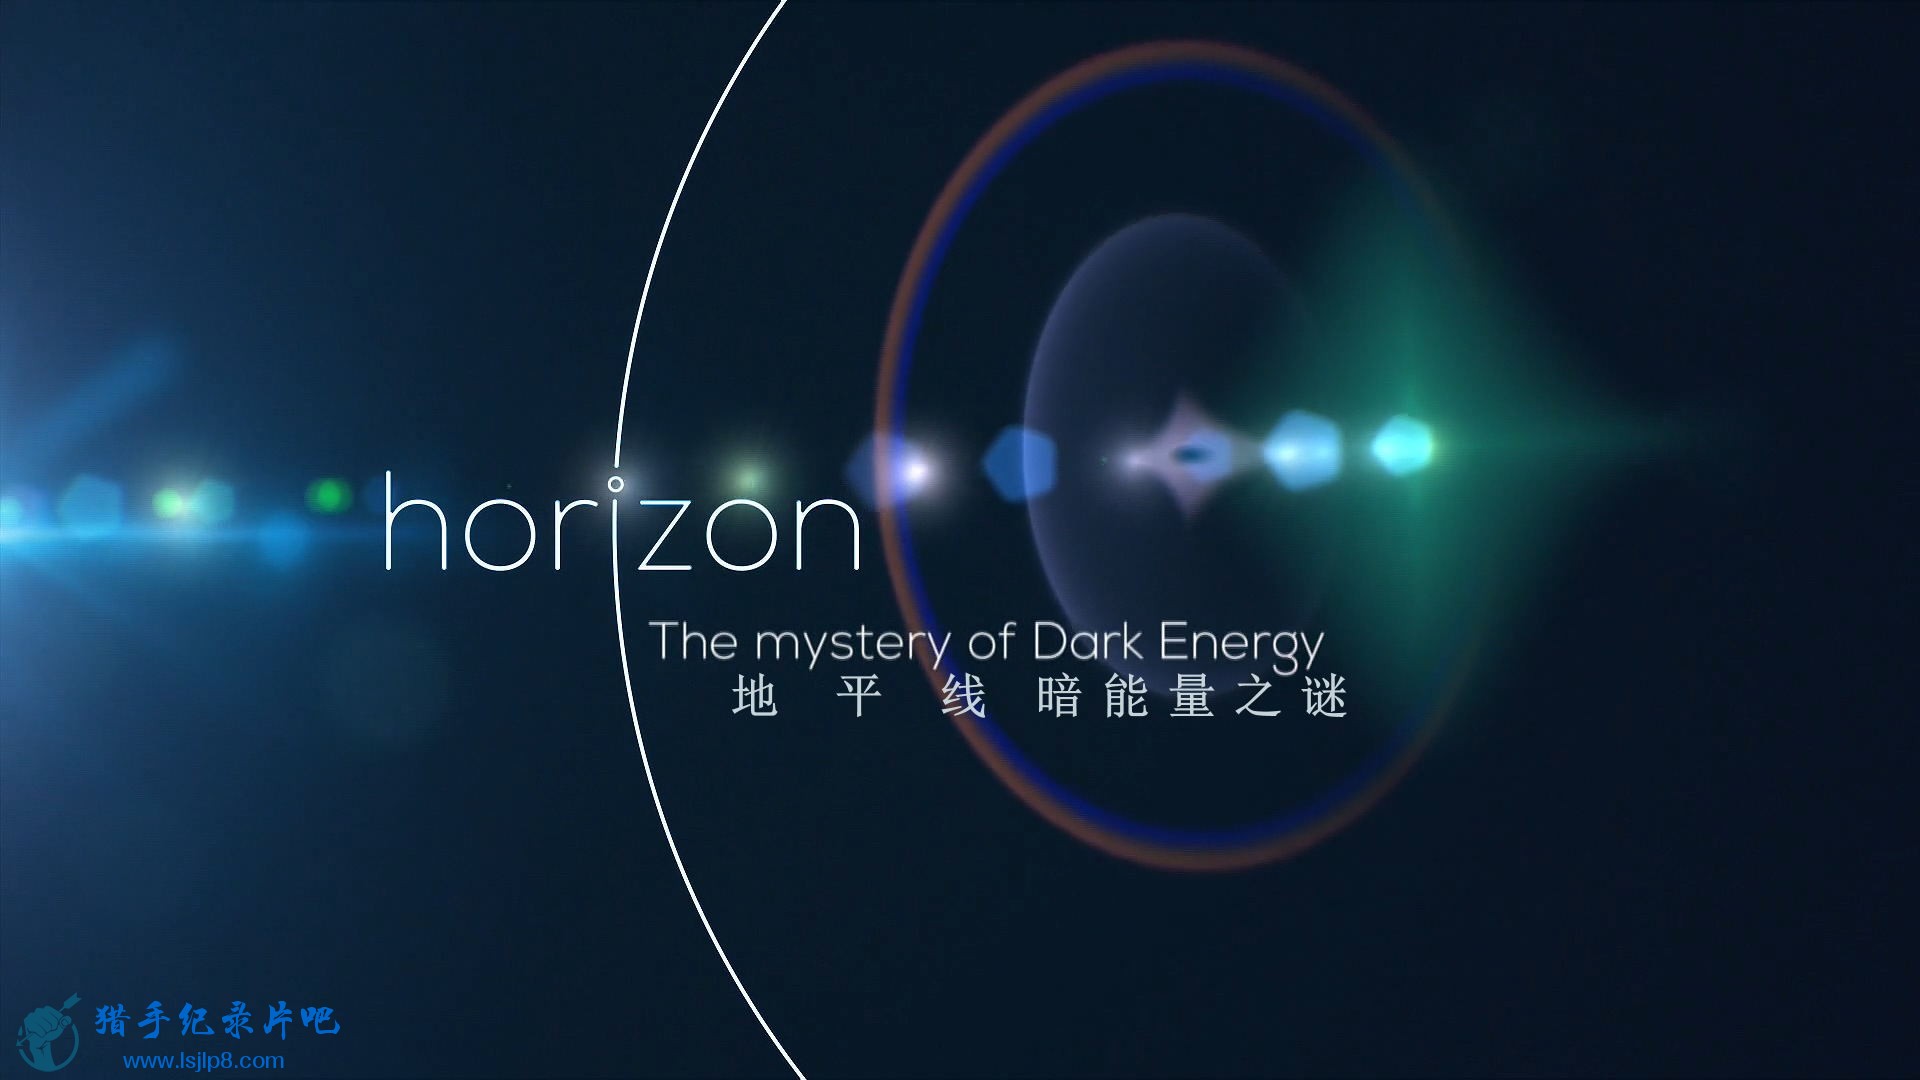 BBC.Horizon.2016.The.Mystery.of.Dark.Energy.1080p.HDTV.x264.AAC.MVGroup.org.mkv_.jpg